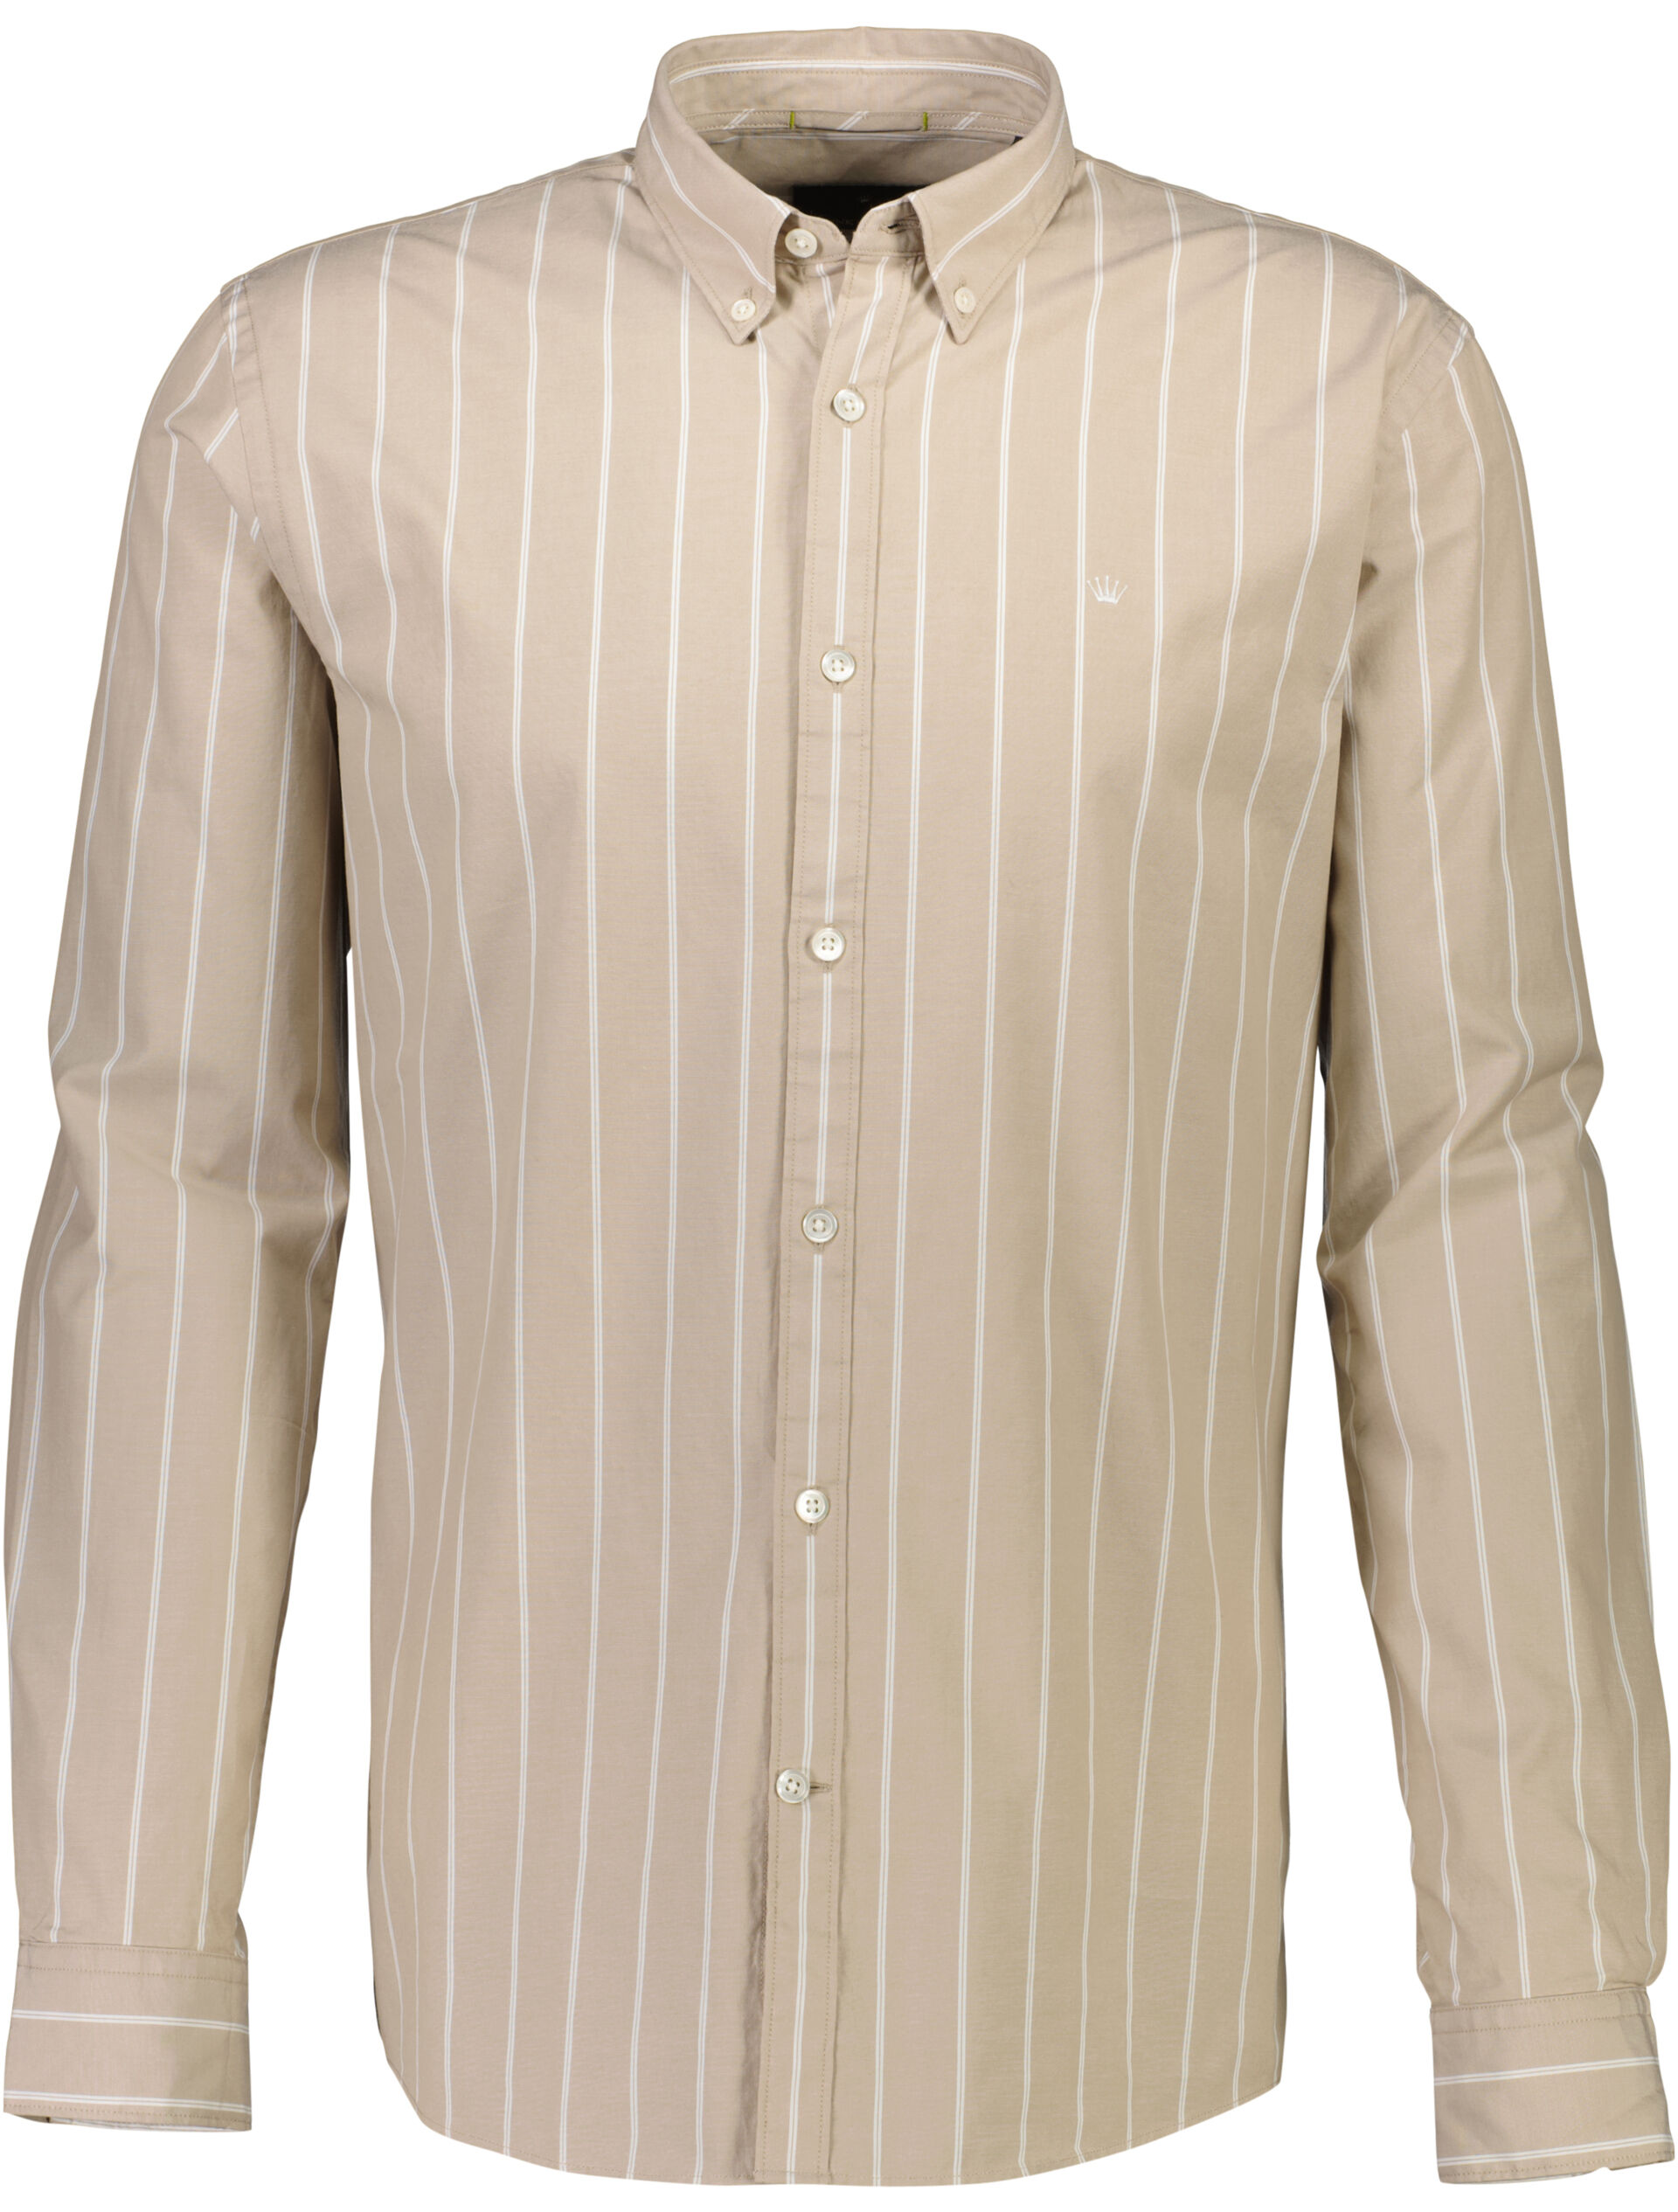 Oxford shirt Oxford shirt Sand 60-202030